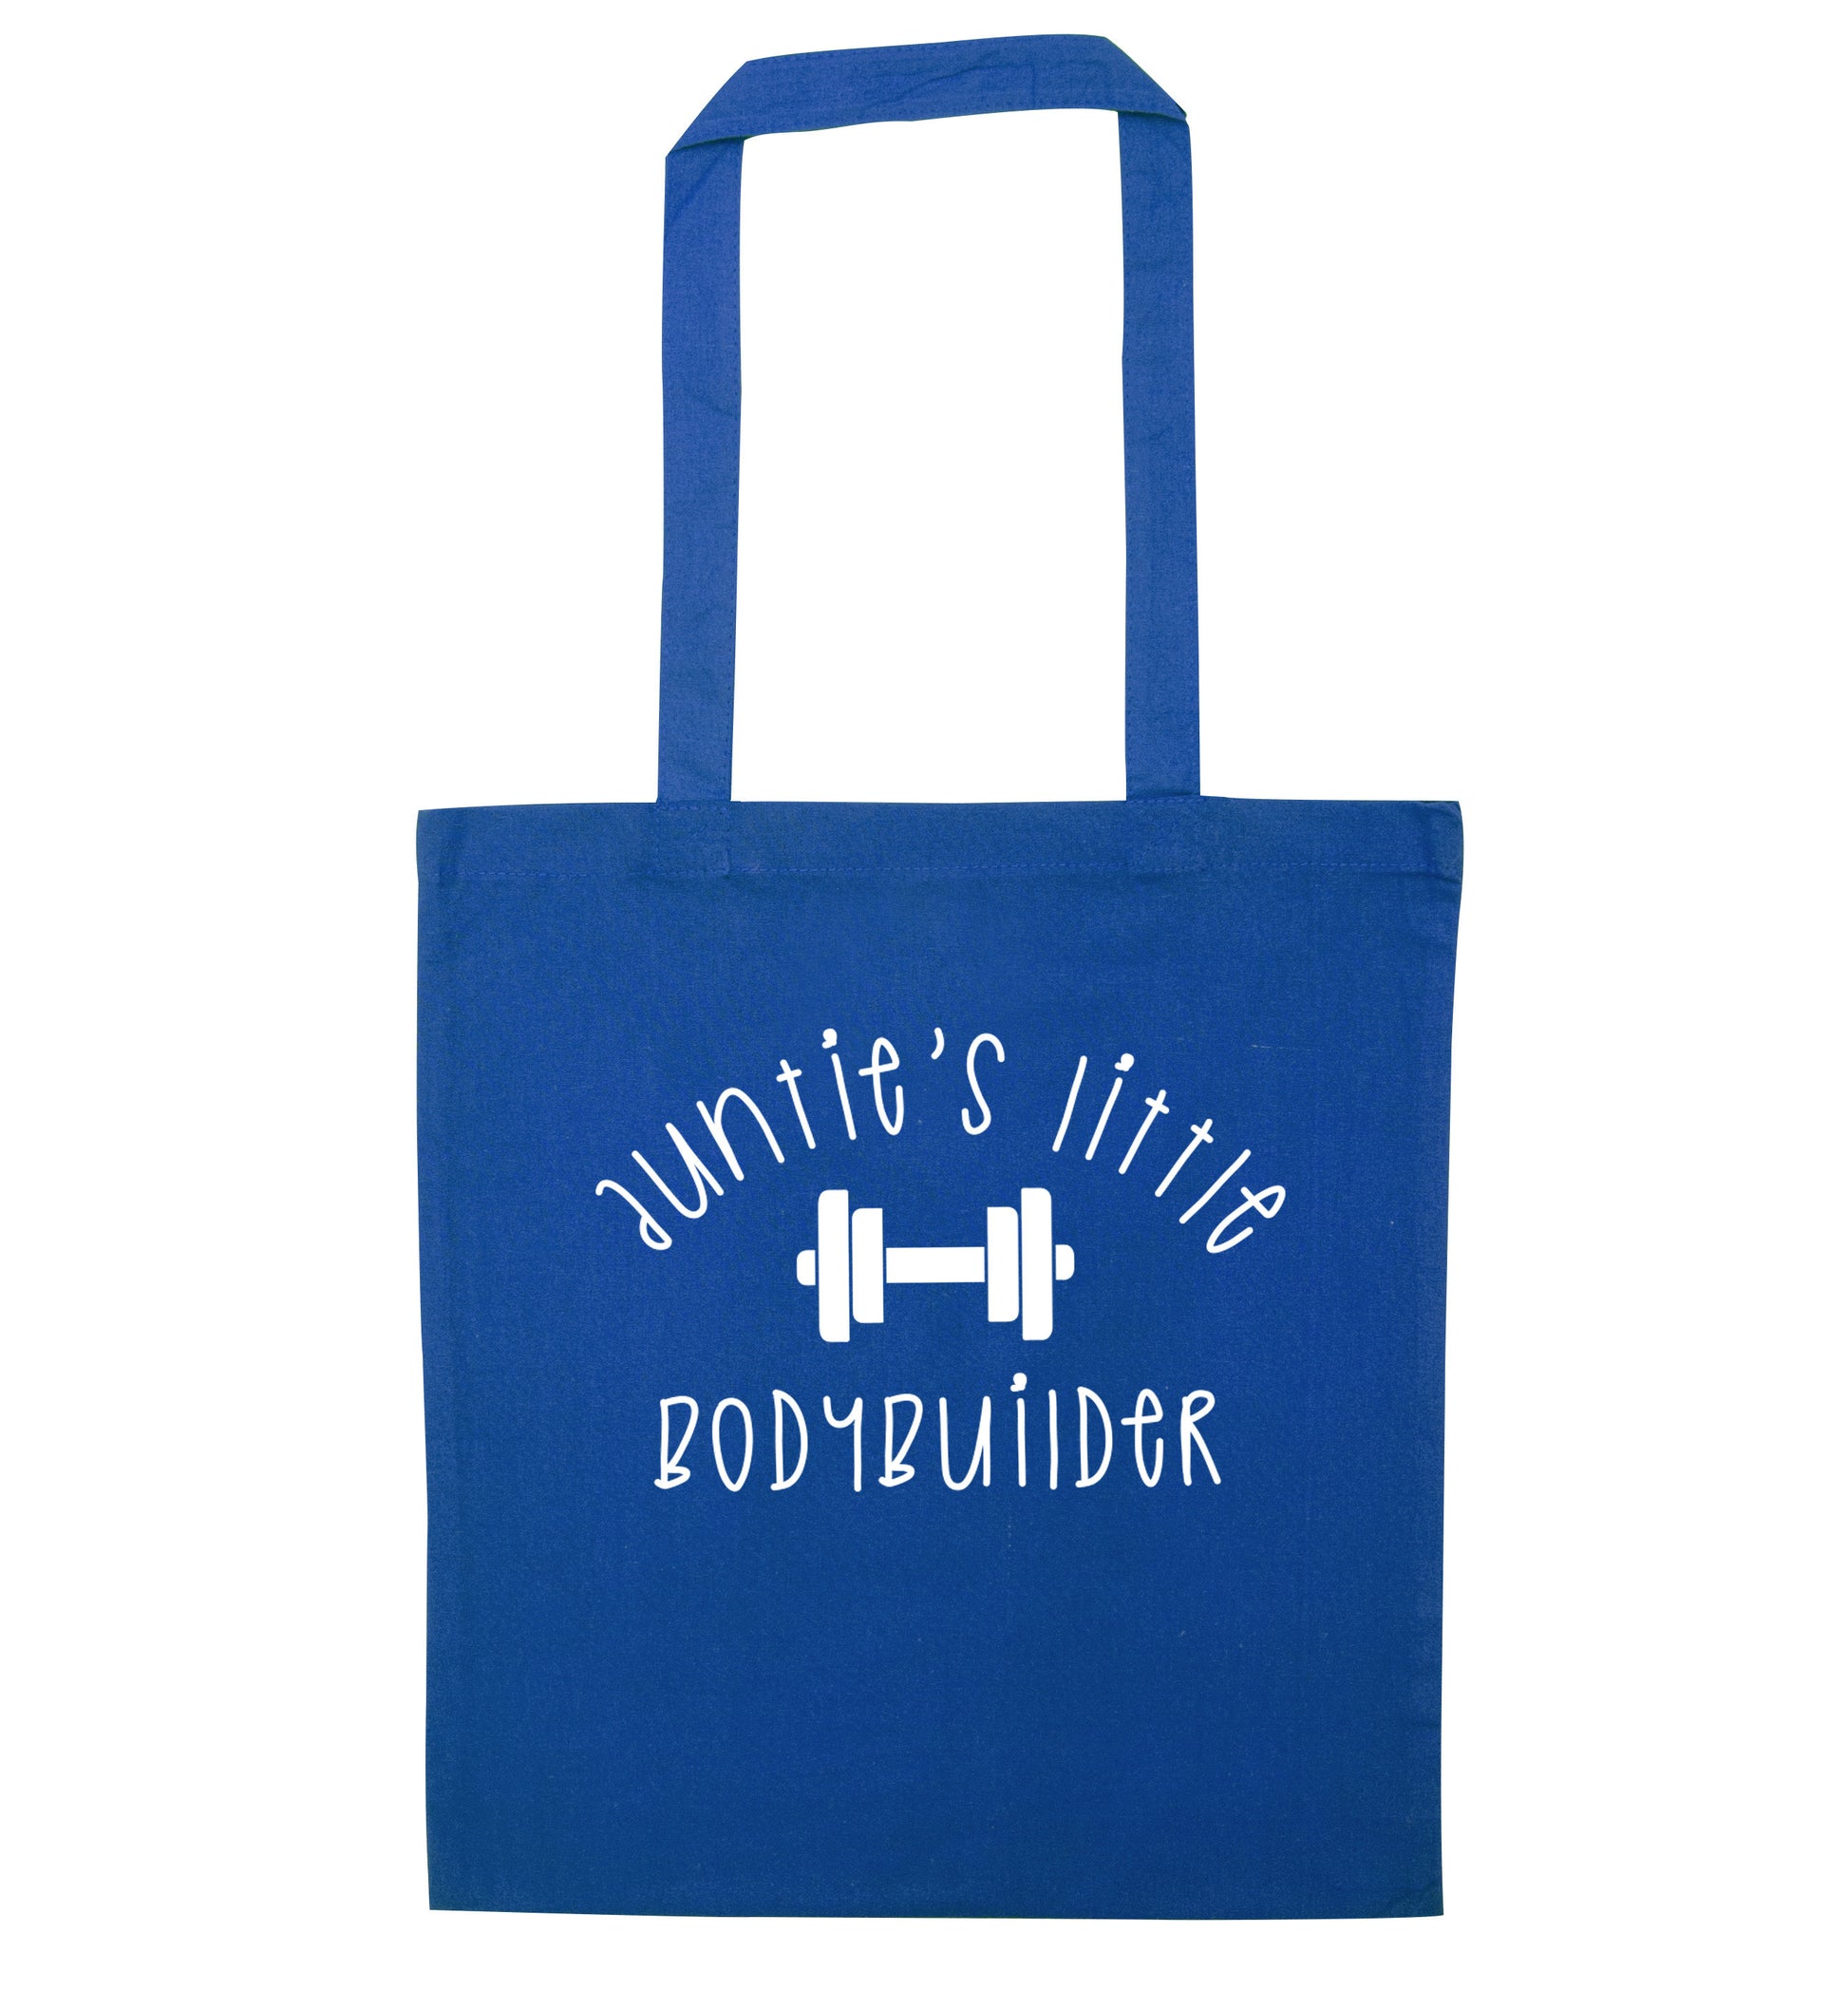 Auntie's little bodybuilder blue tote bag